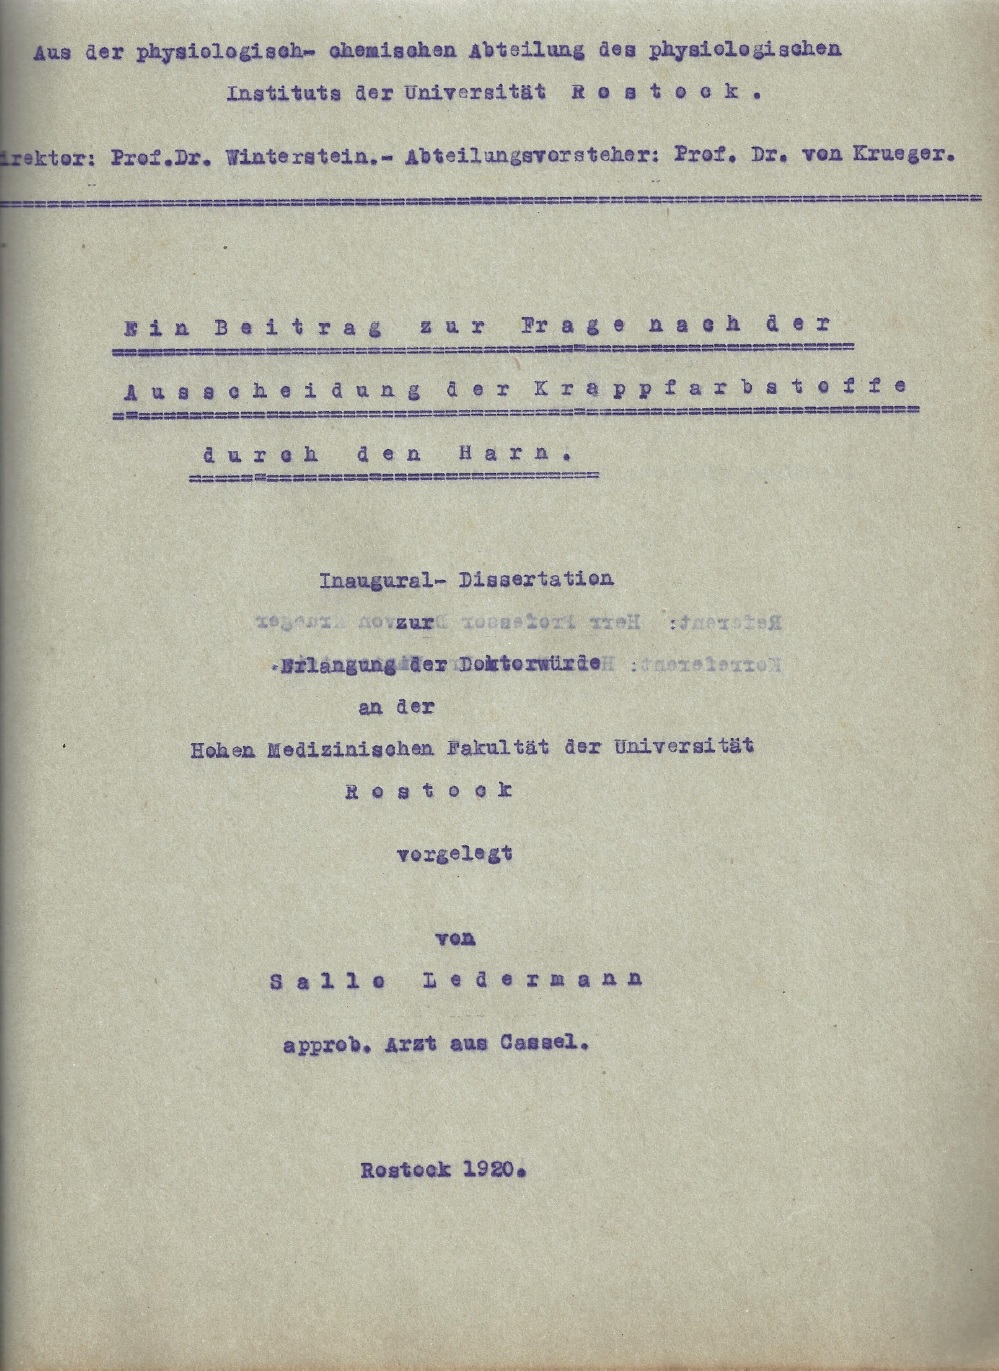 Dissertation 1920, Promotionsakte, Universitätsarchiv Rostock, Medizinische Fakultät, 89, Akten betr. Promotion des approbierten Arztes Sallo Ledermann aus Cassel